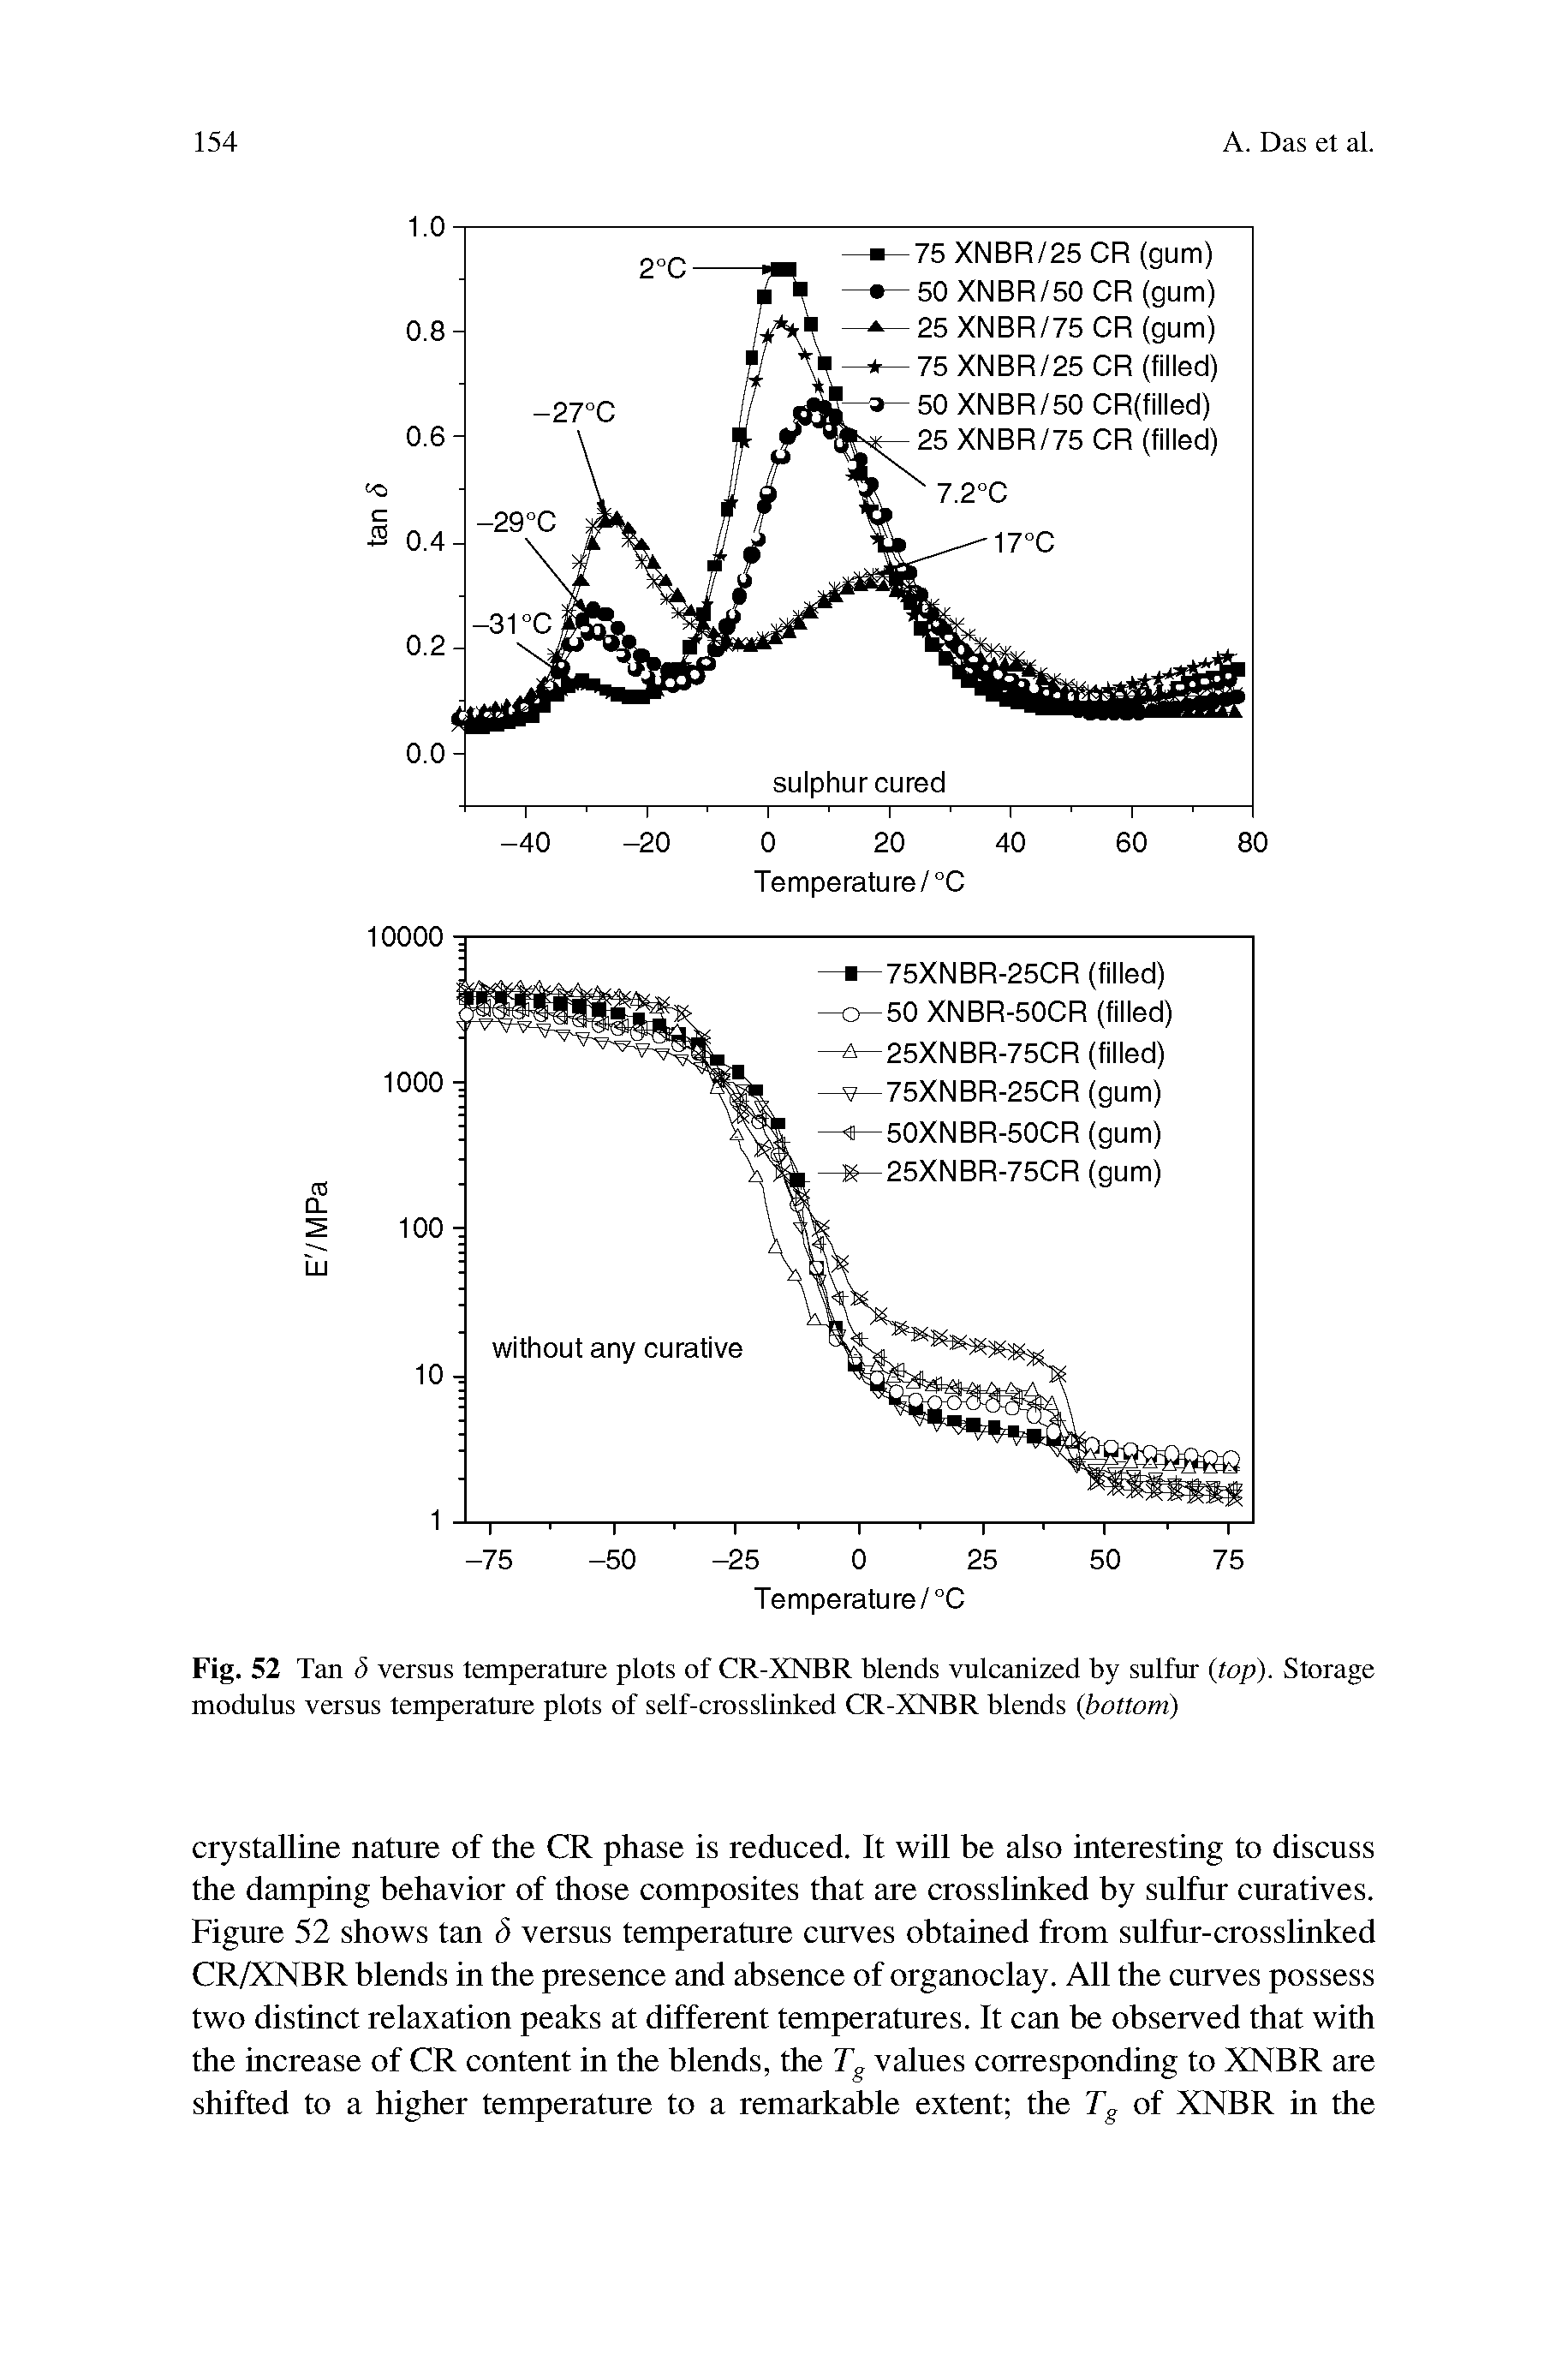 Fig. 52 Tan <5 versus temperature plots of CR-XNBR blends vulcanized by sulfur (top). Storage modulus versus temperature plots of self-crosslinked CR-XNBR blends (bottom)...